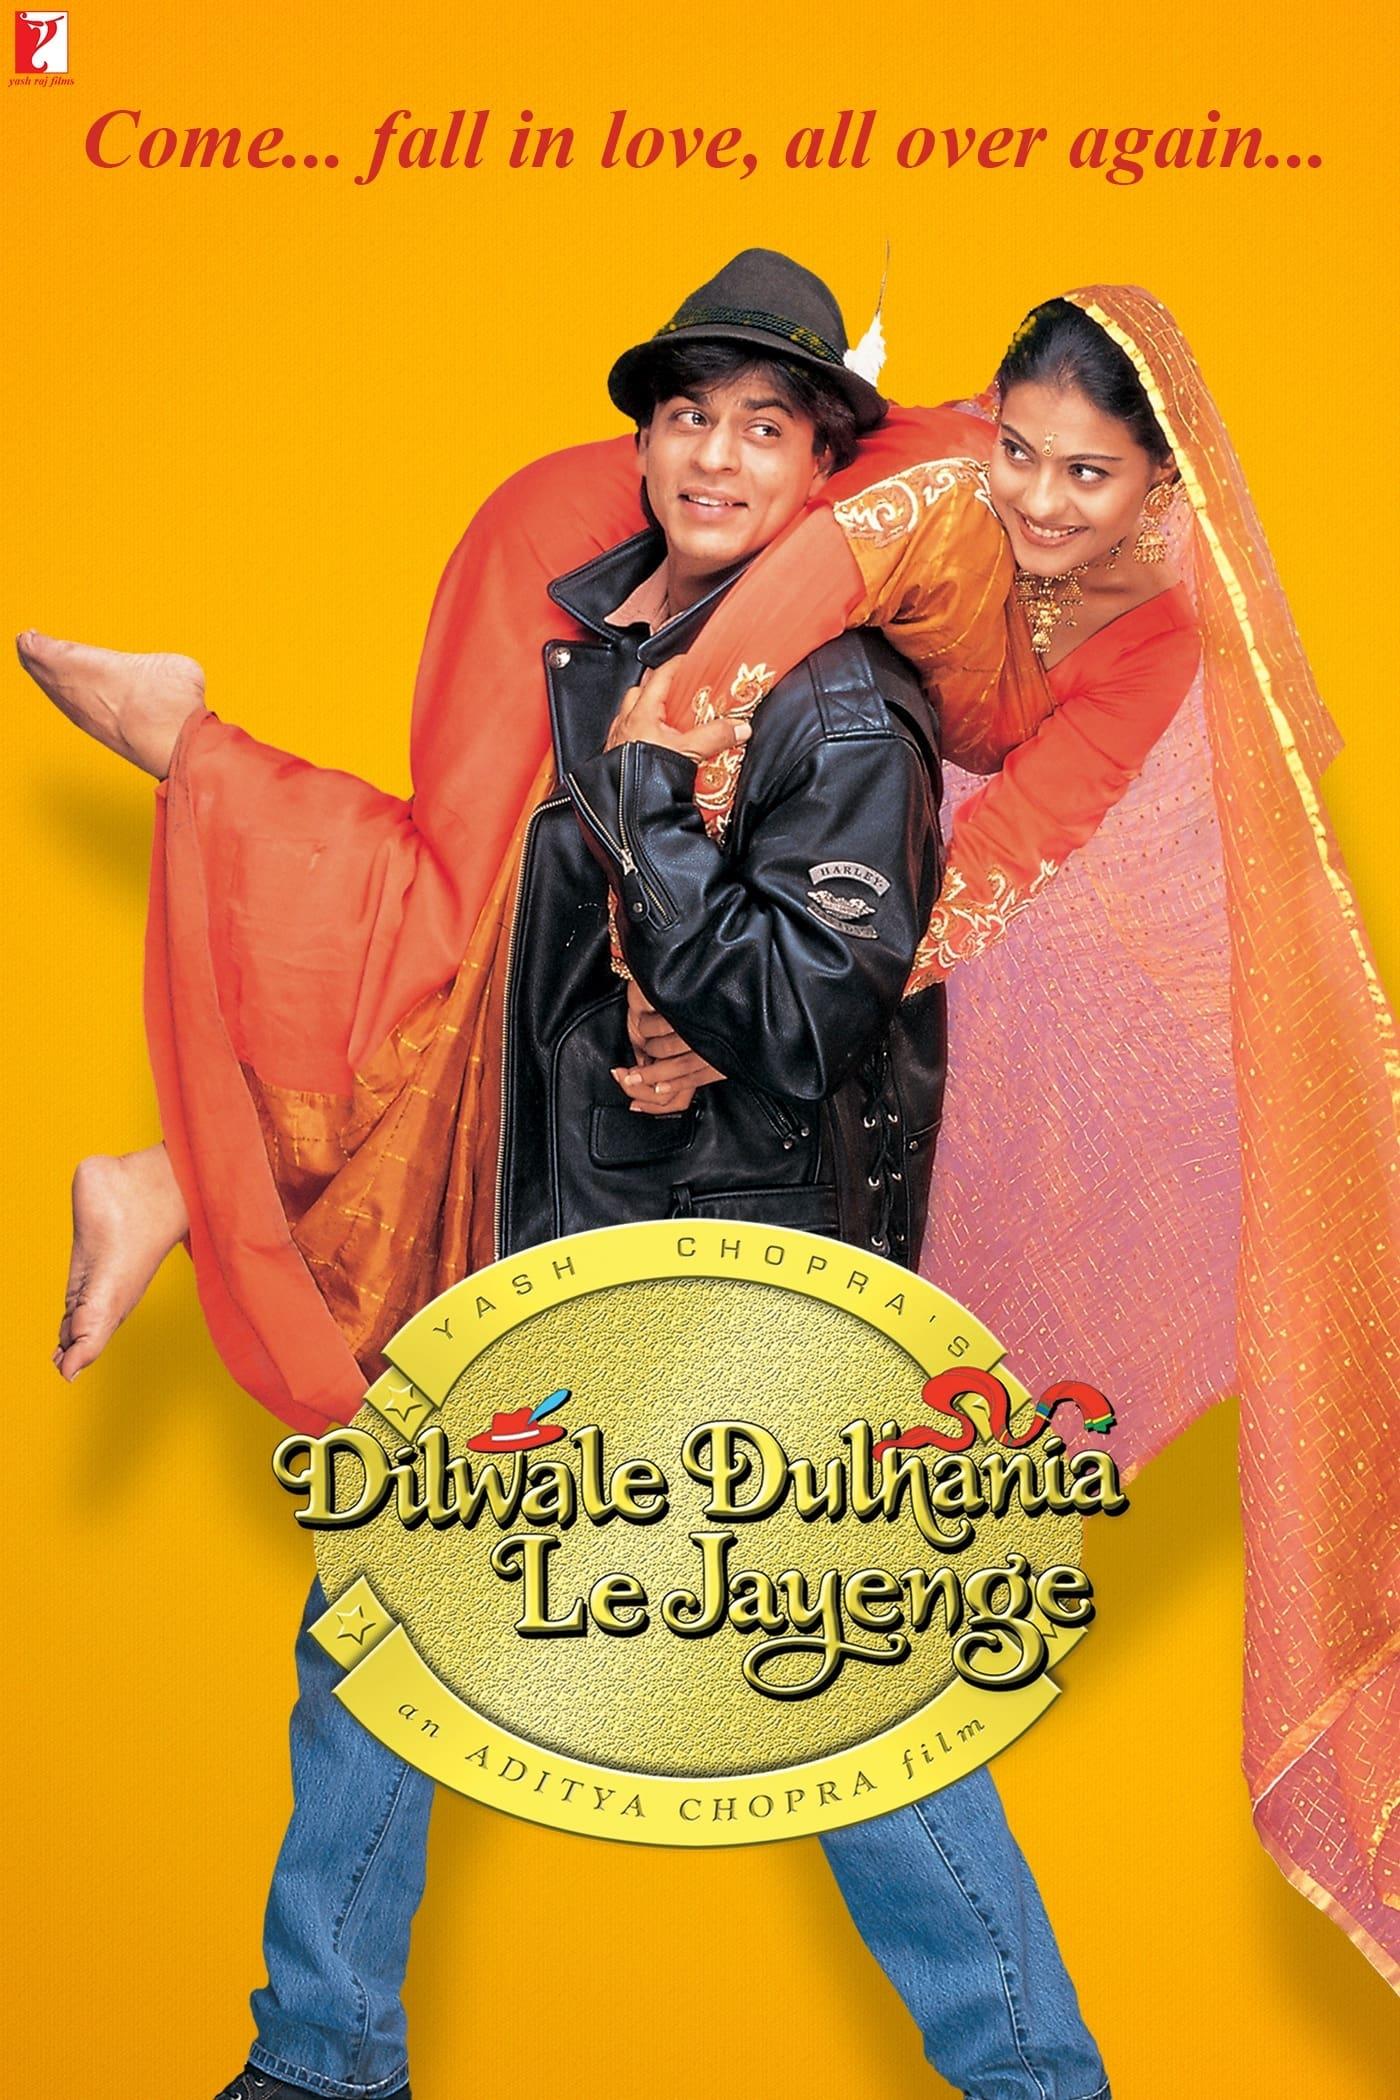 Movie poster of "Dilwale Dulhania Le Jayenge"